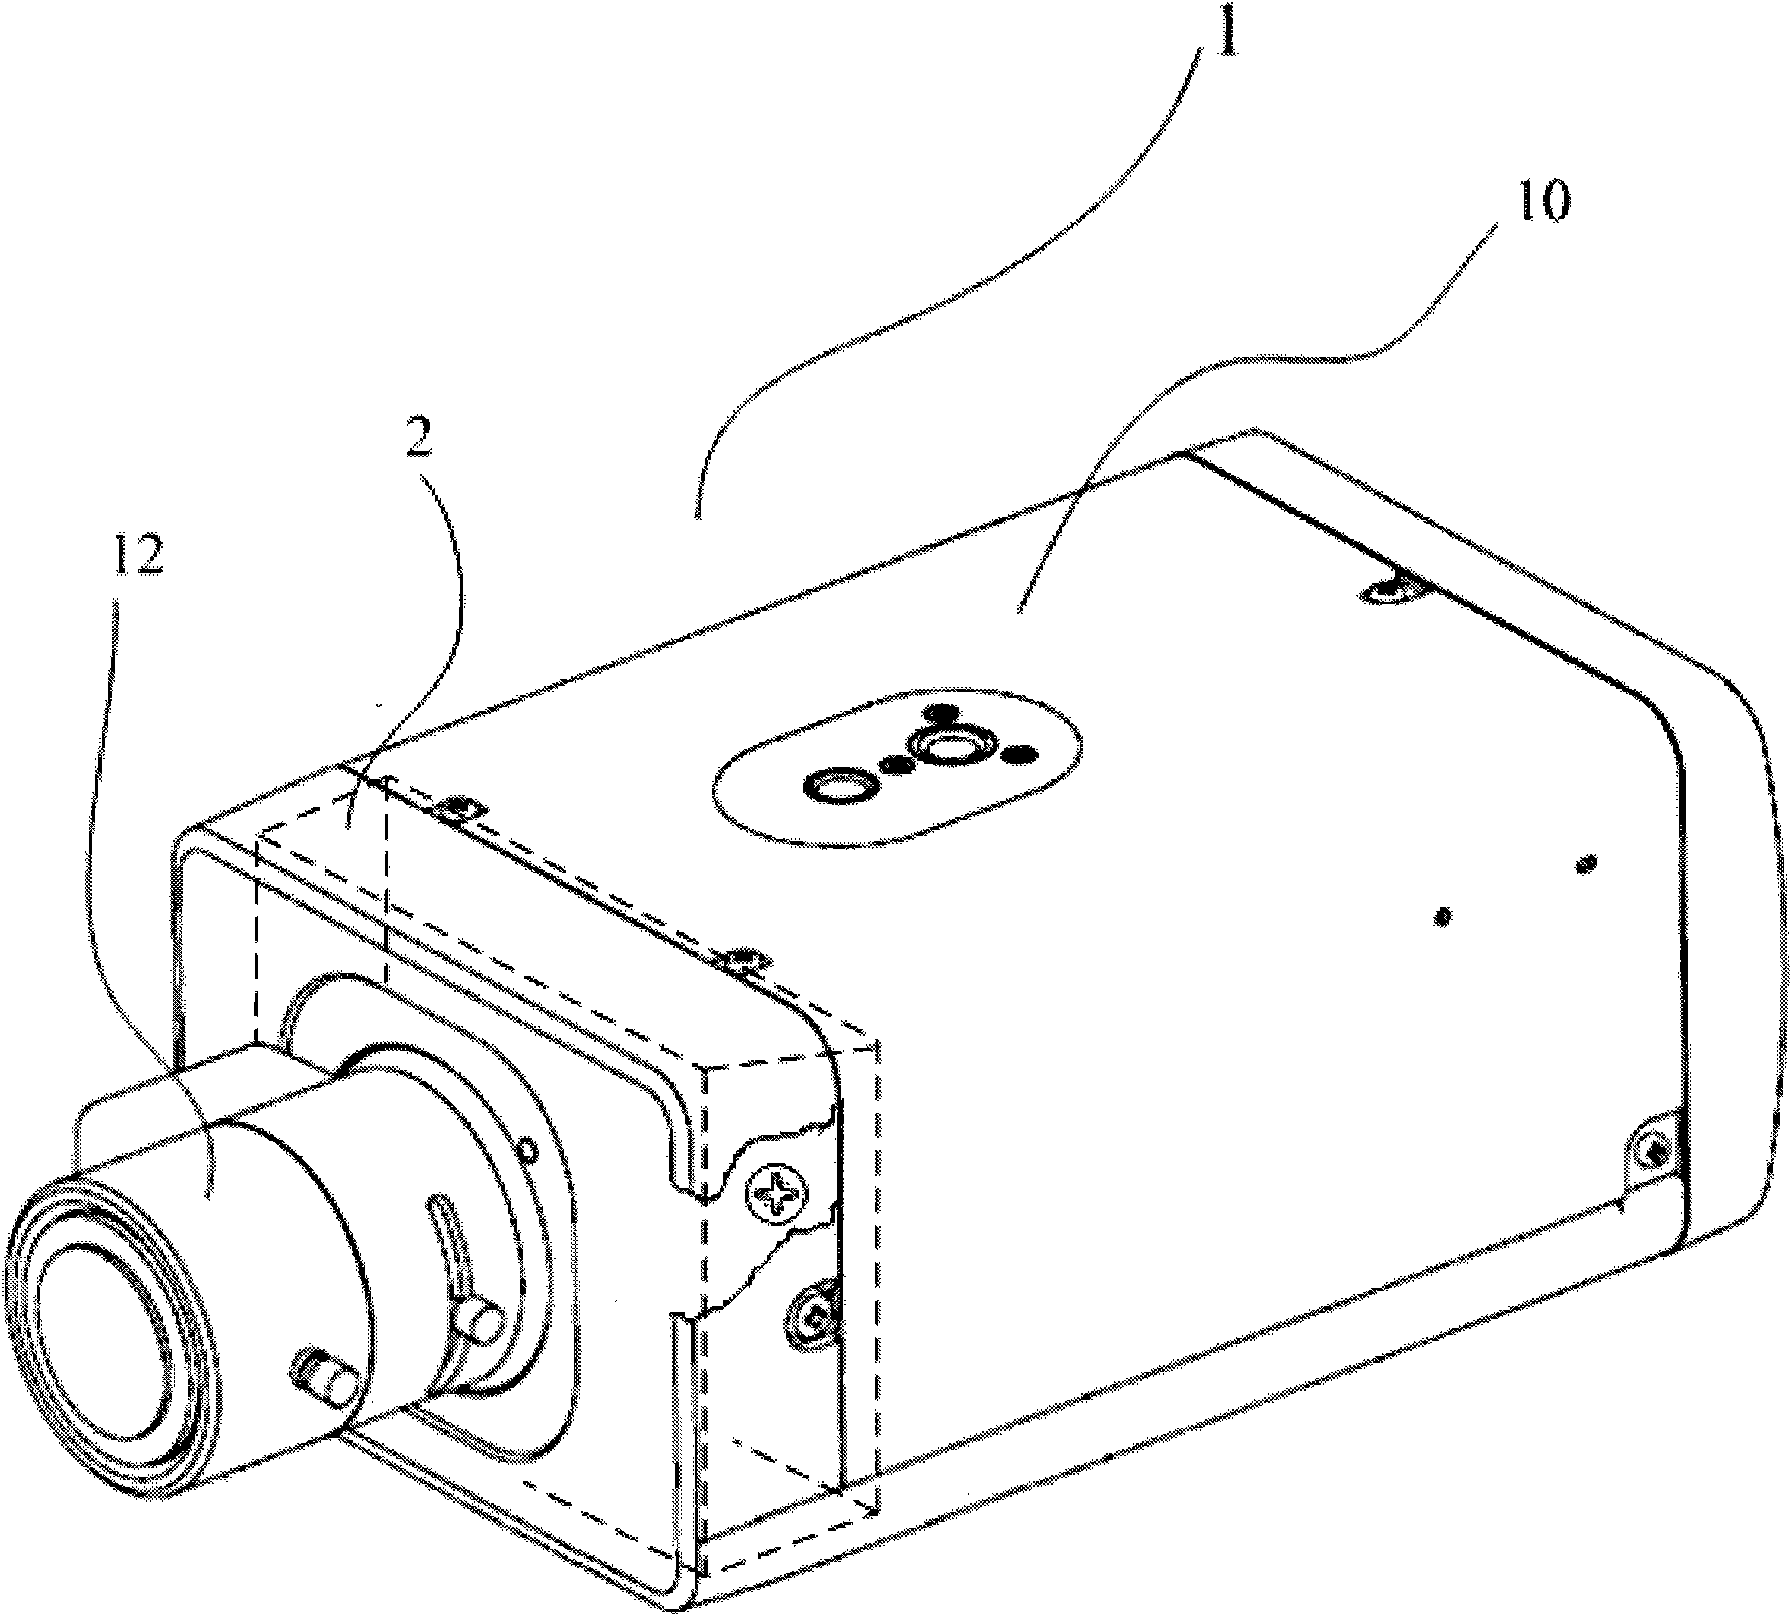 Optical focusing device